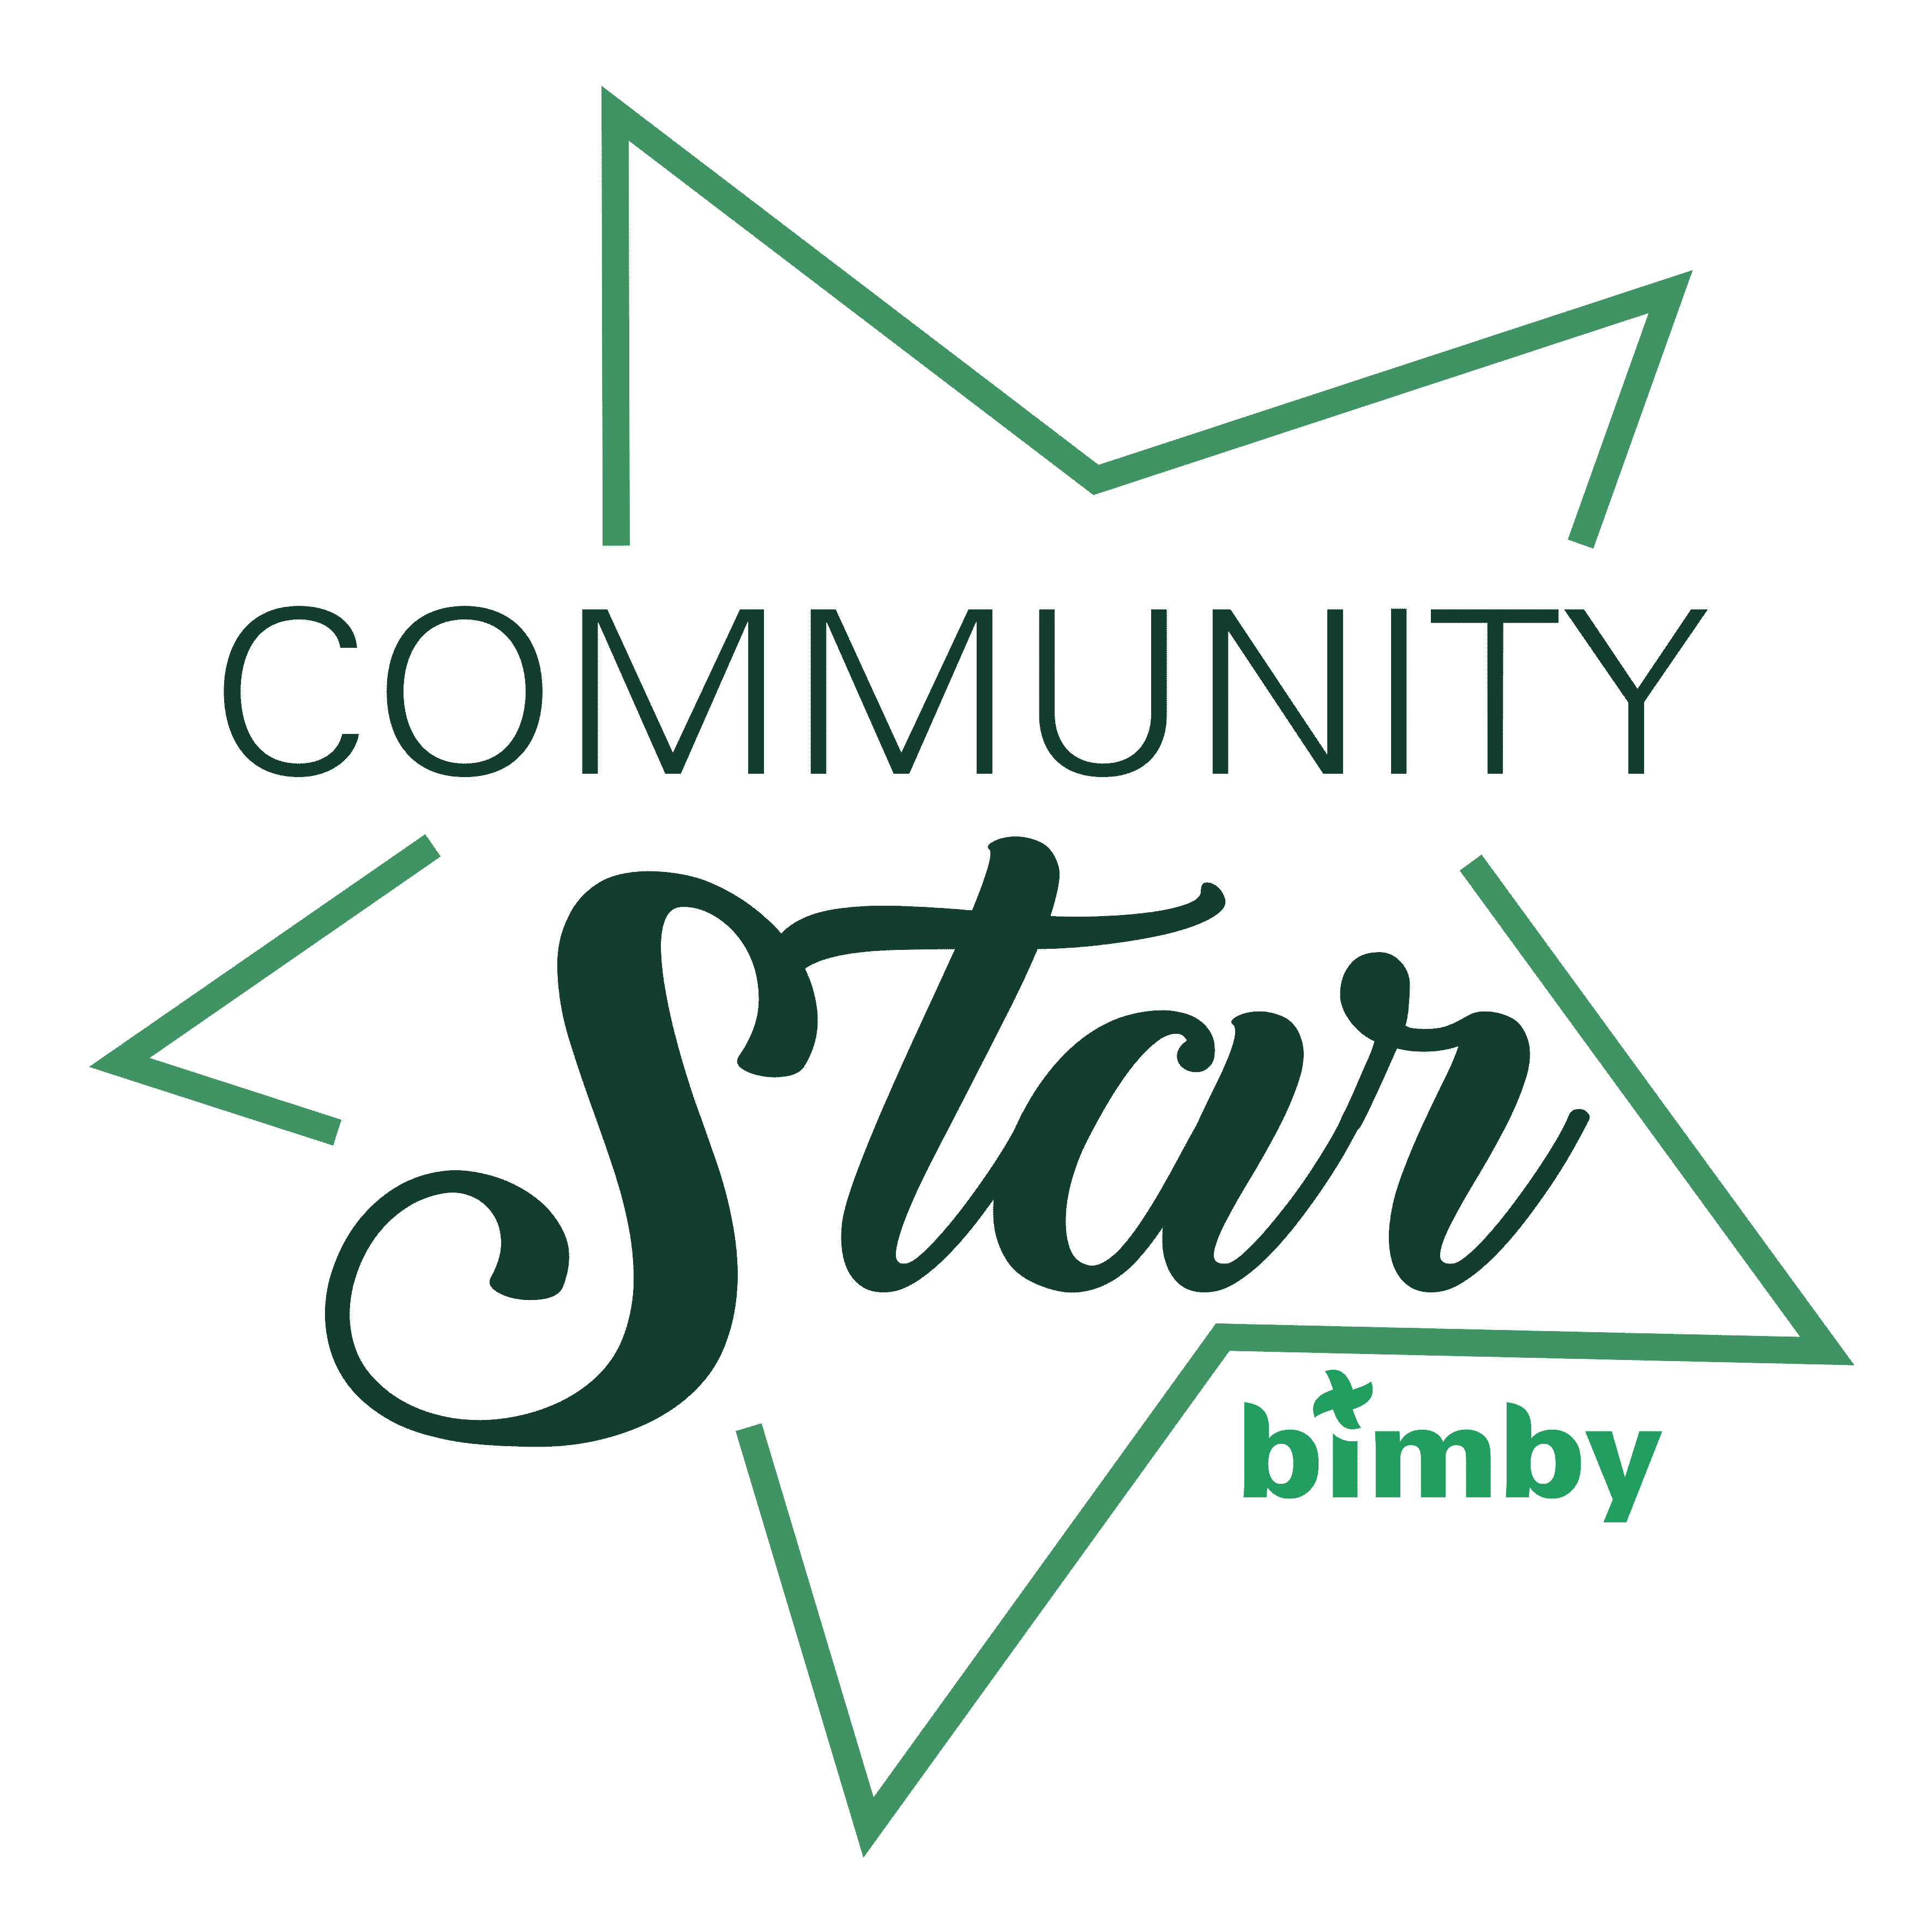 Community Stars